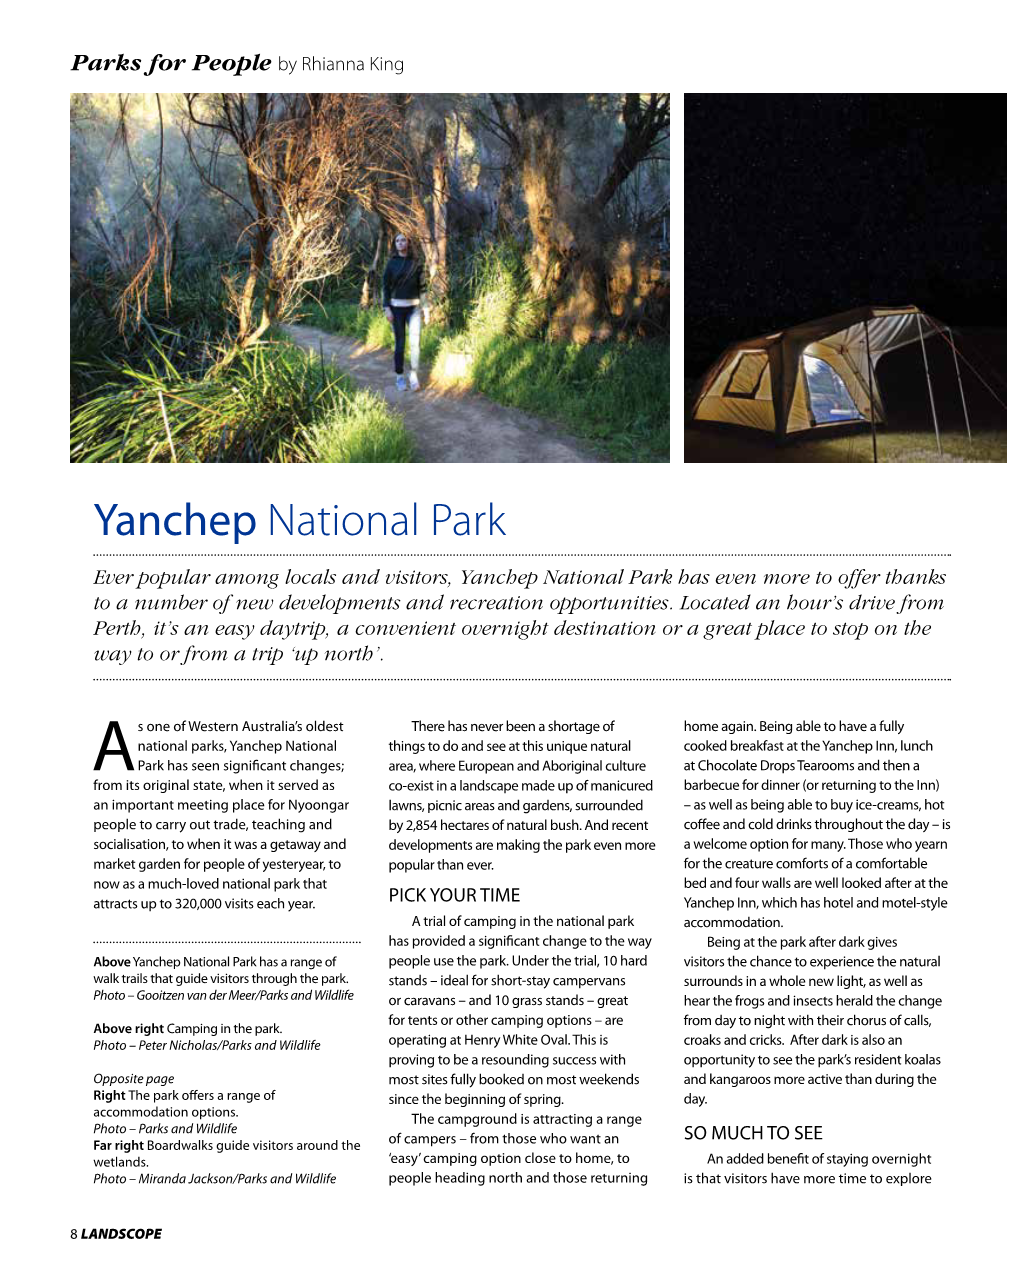 Yanchep National Park